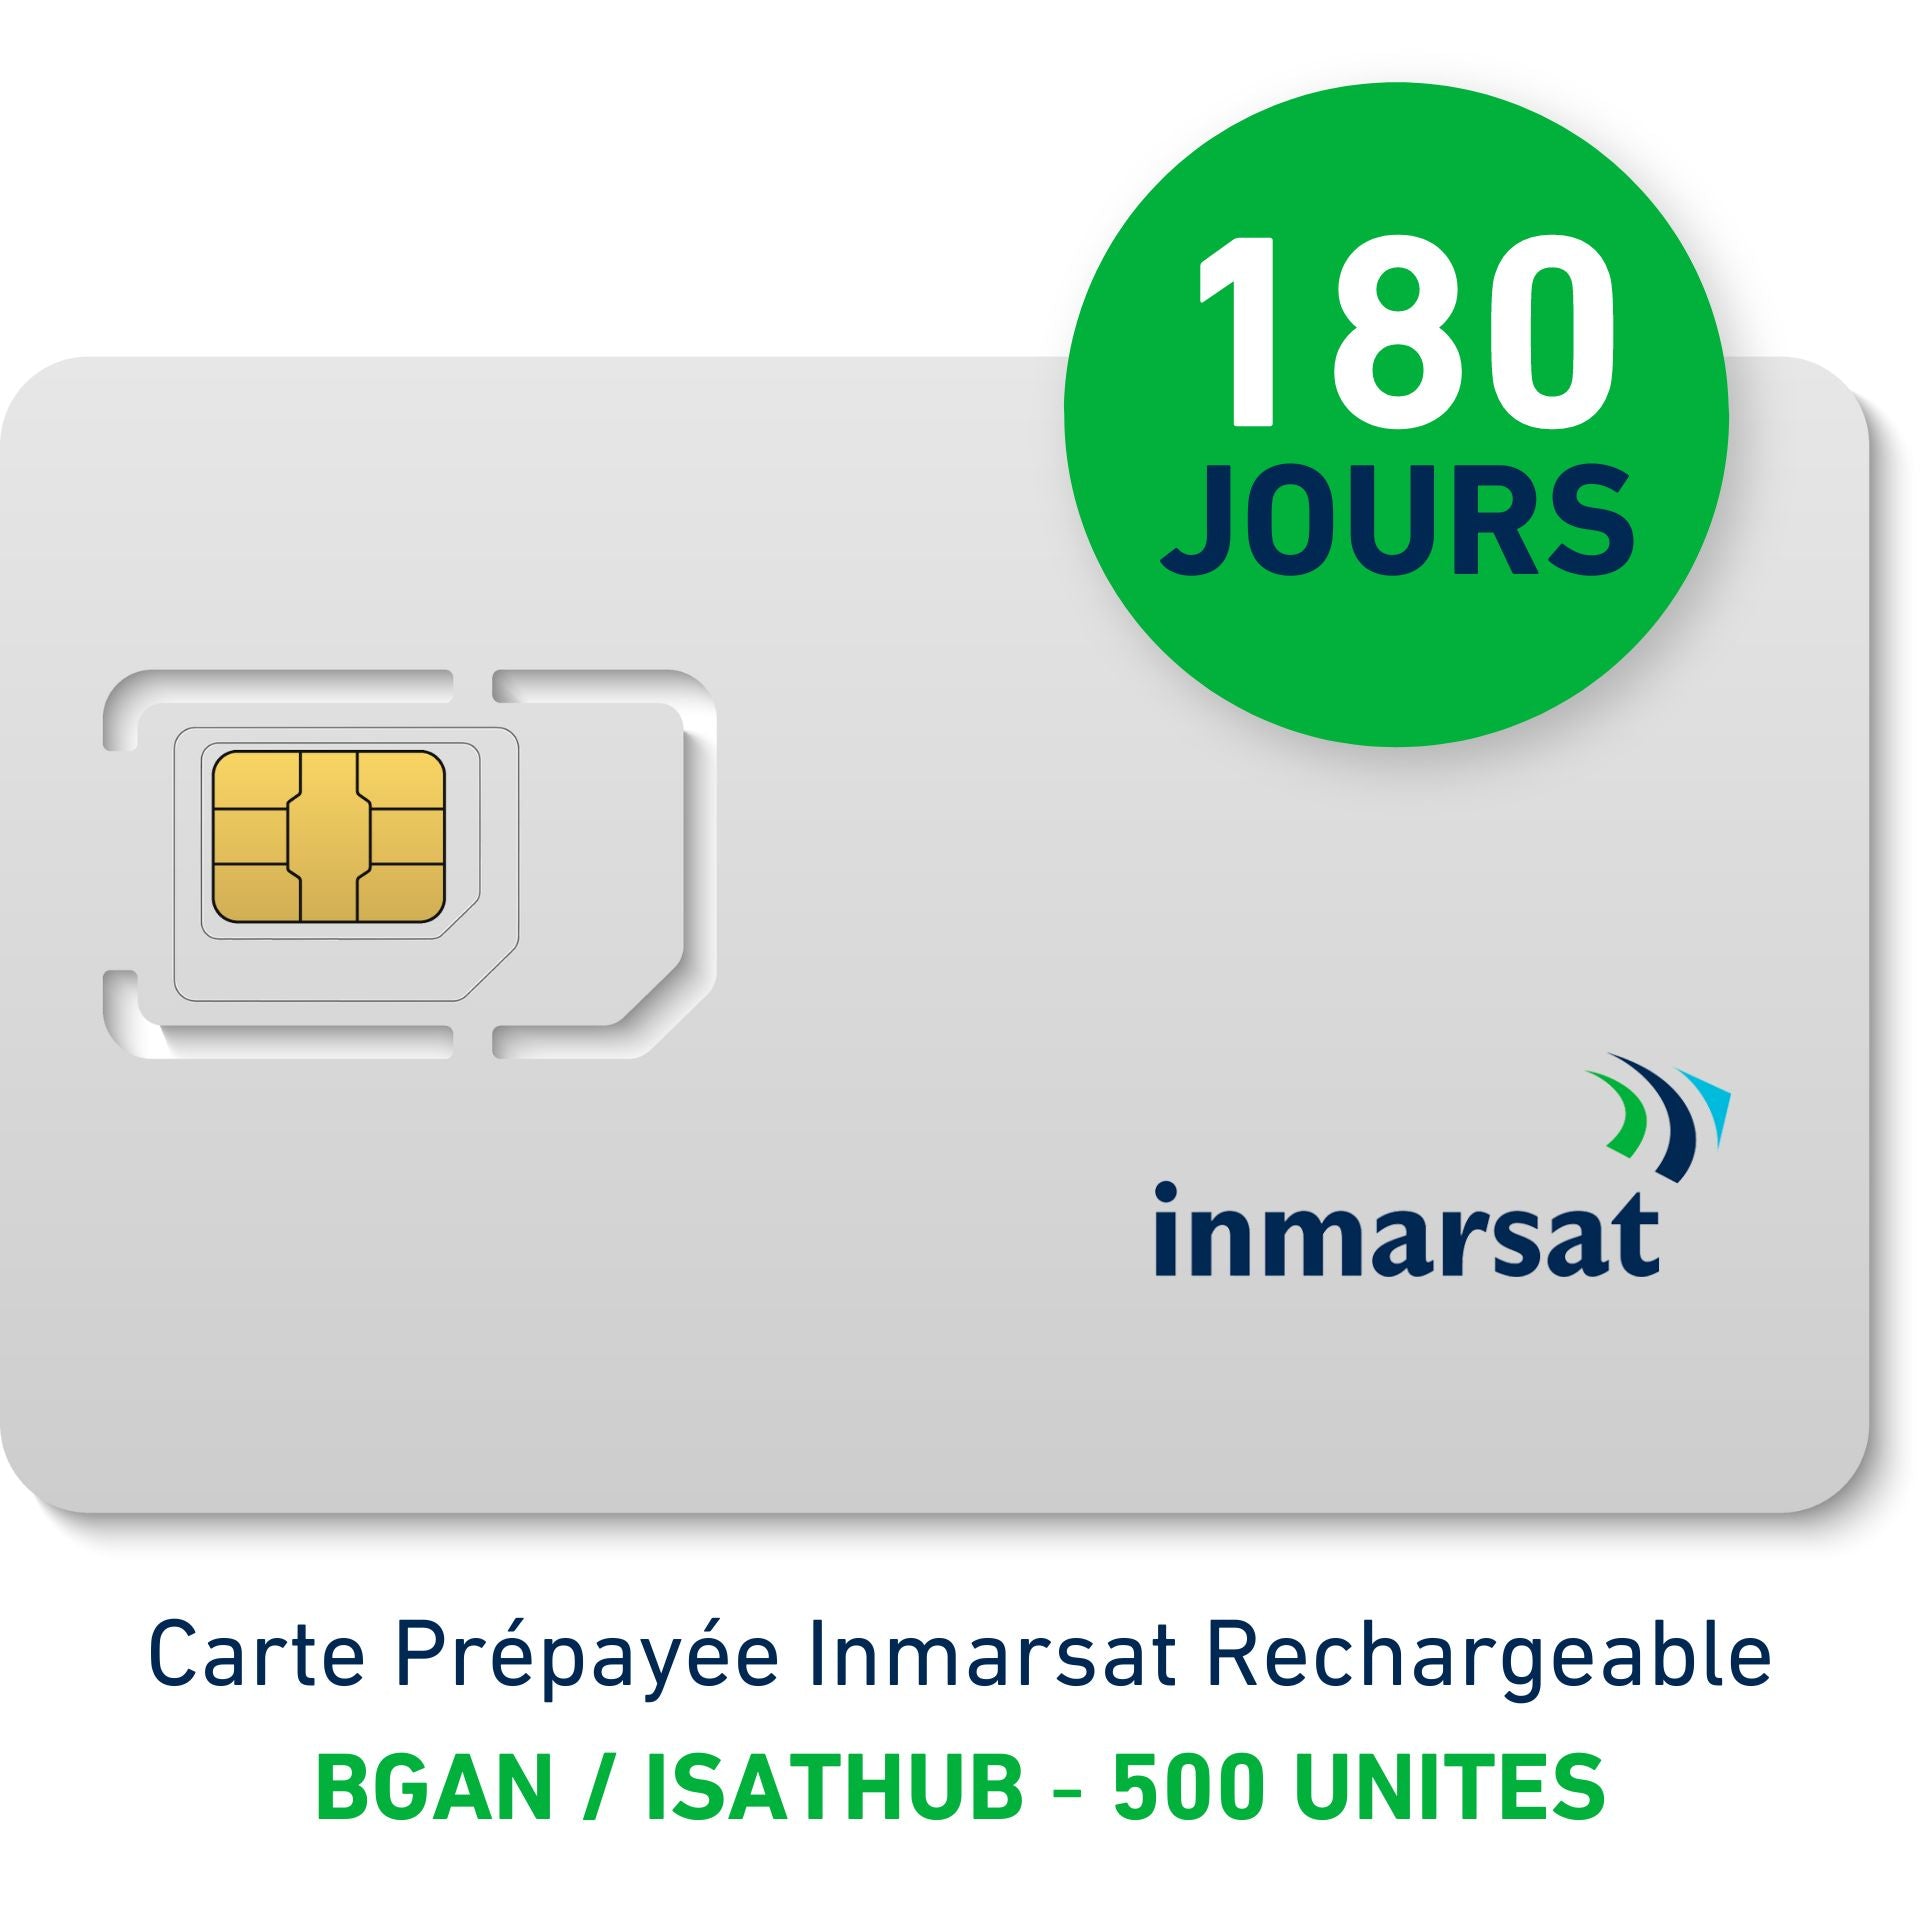 INMARSAT Prepaid-Karte, wiederaufladbar BGAN/IsatHub - 500 UNITS - 180 TAGE